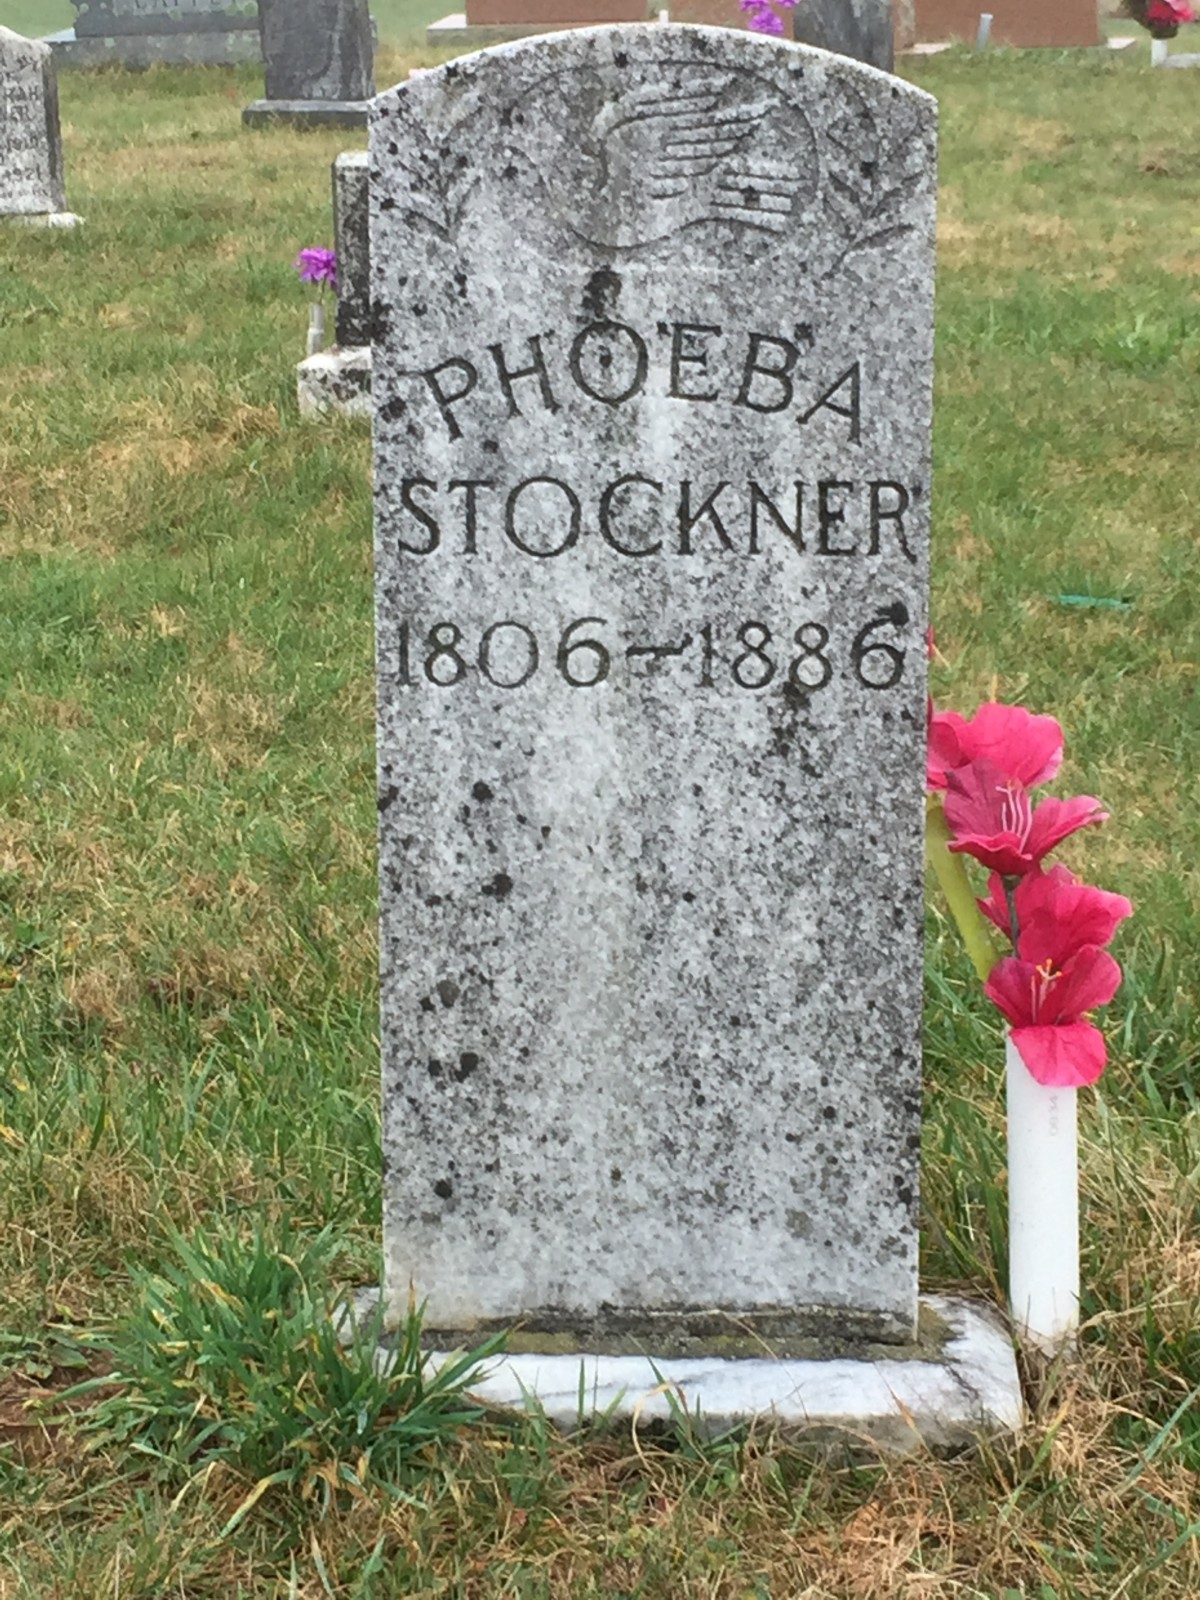 Phoeba Stockner Gravestone